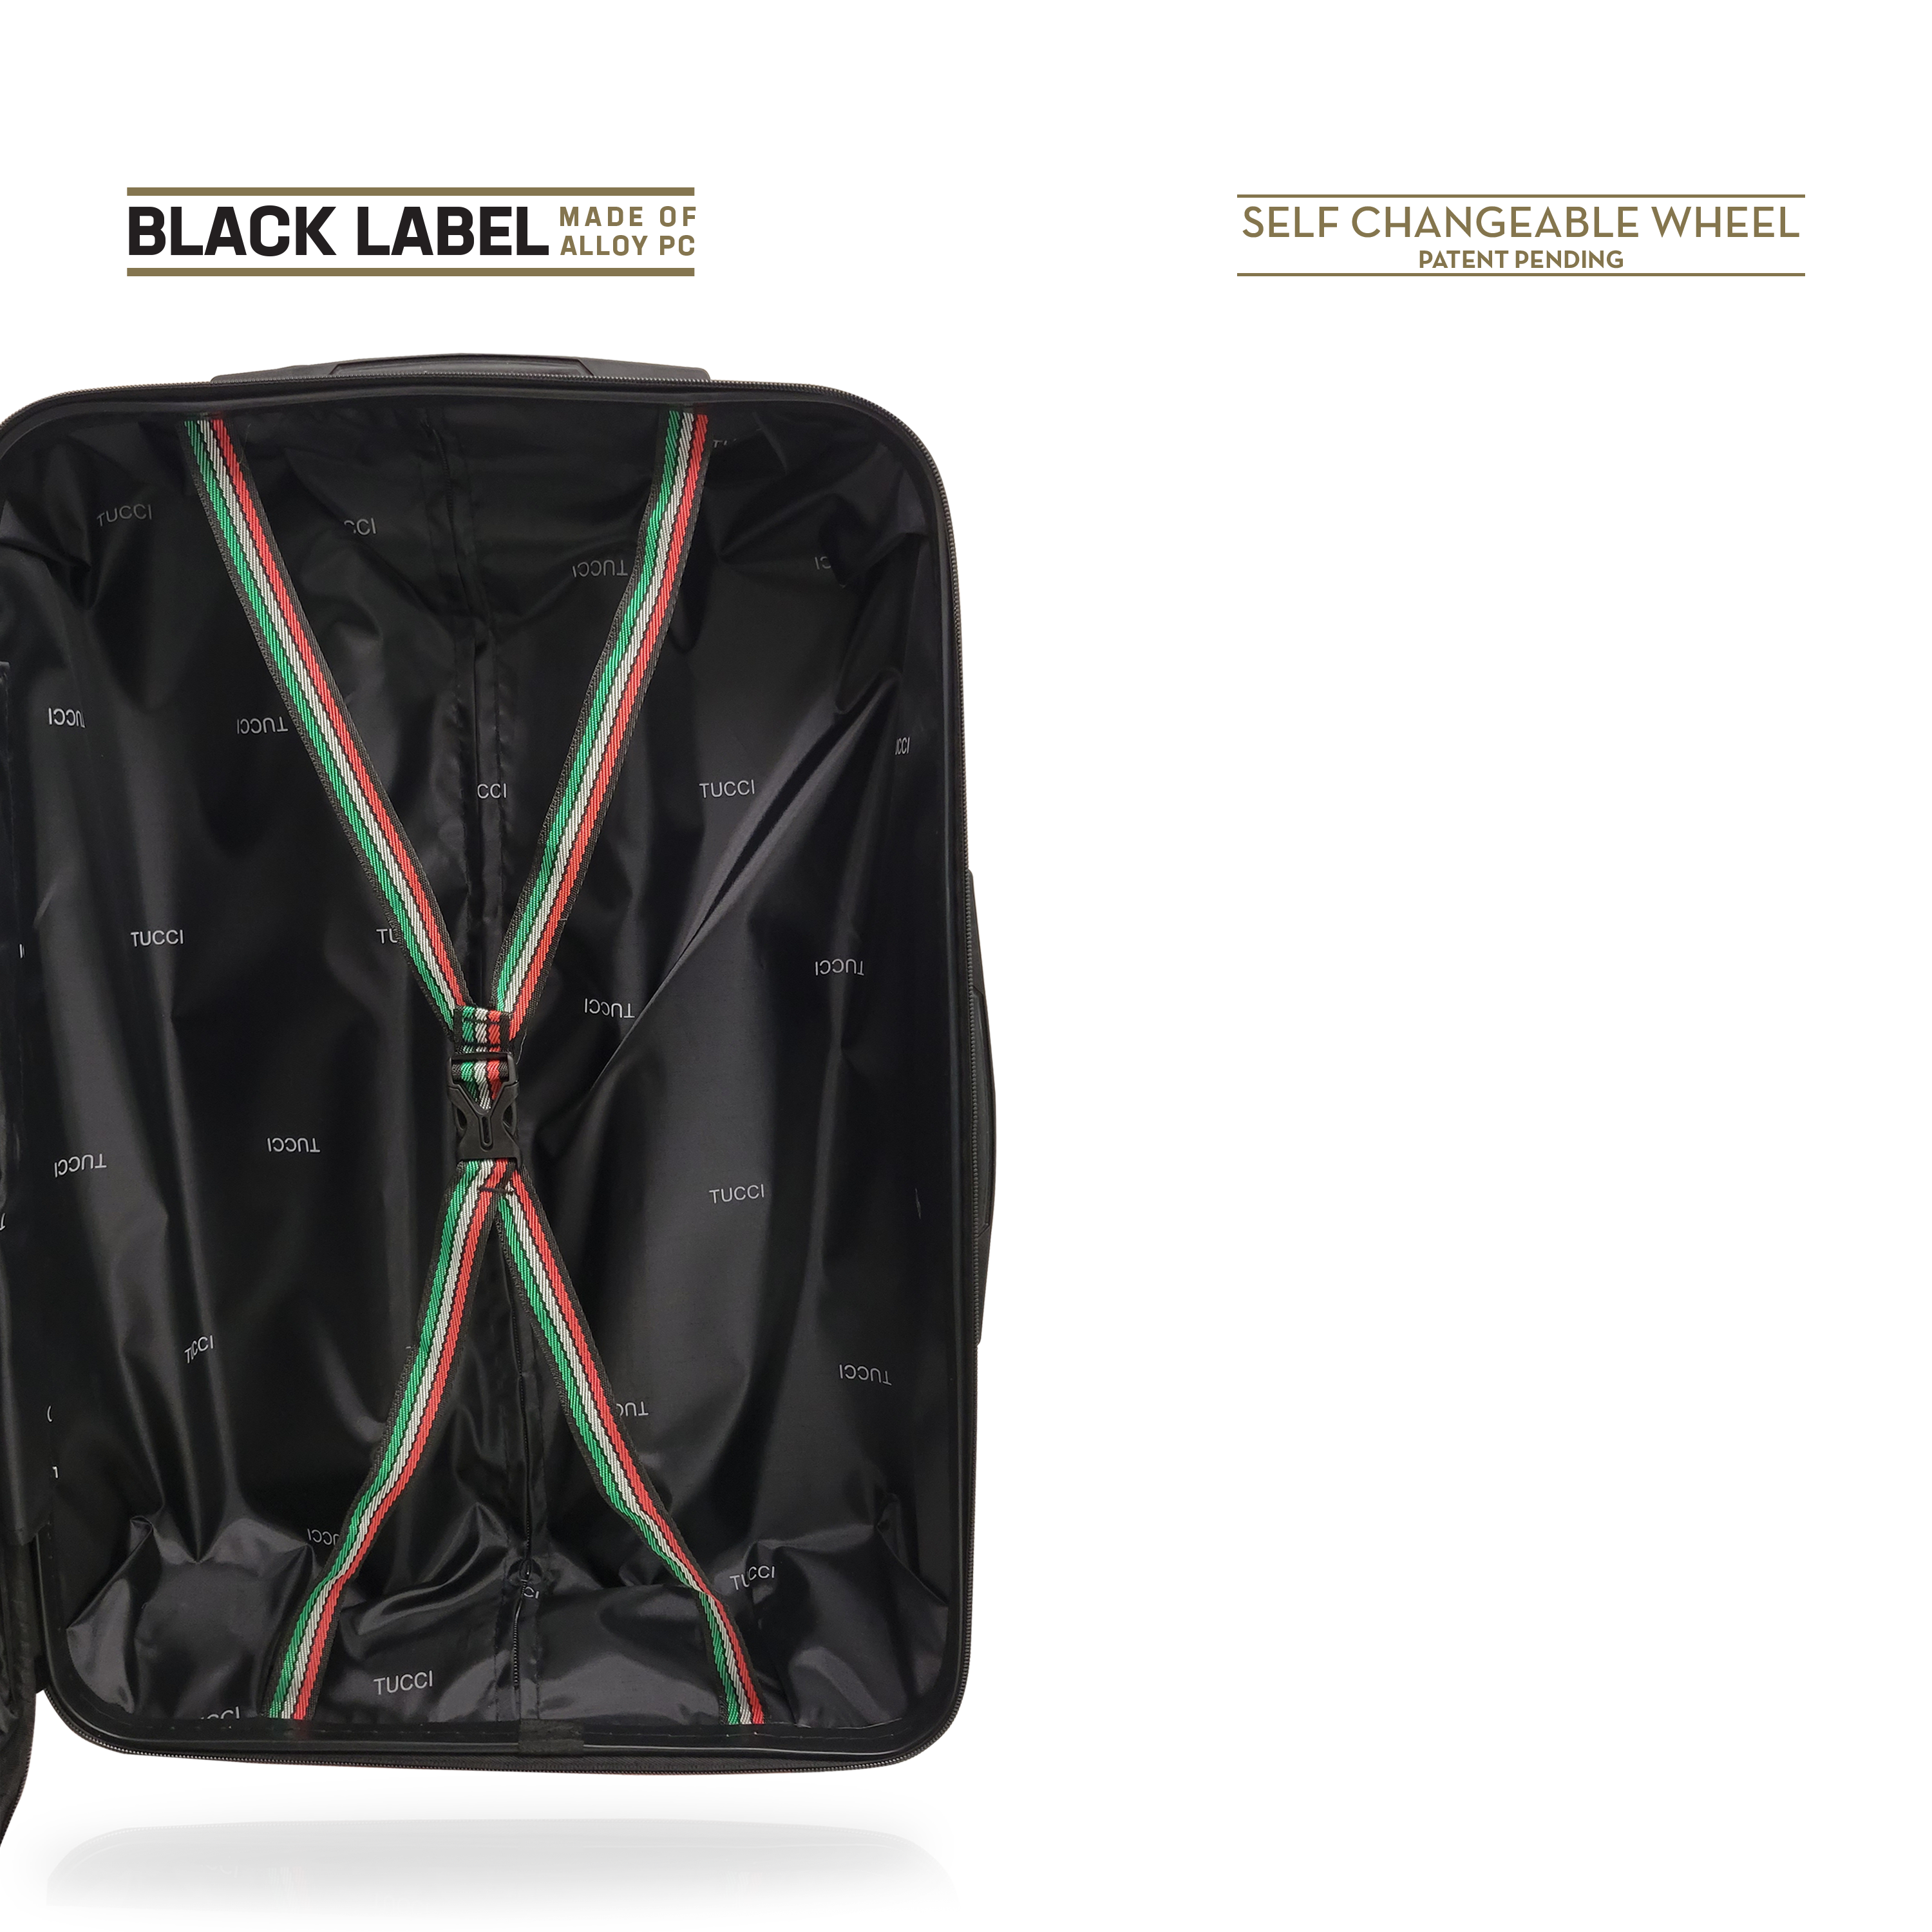 TUCCI SELVATICO 28" Large Expandable Travel Suitcase